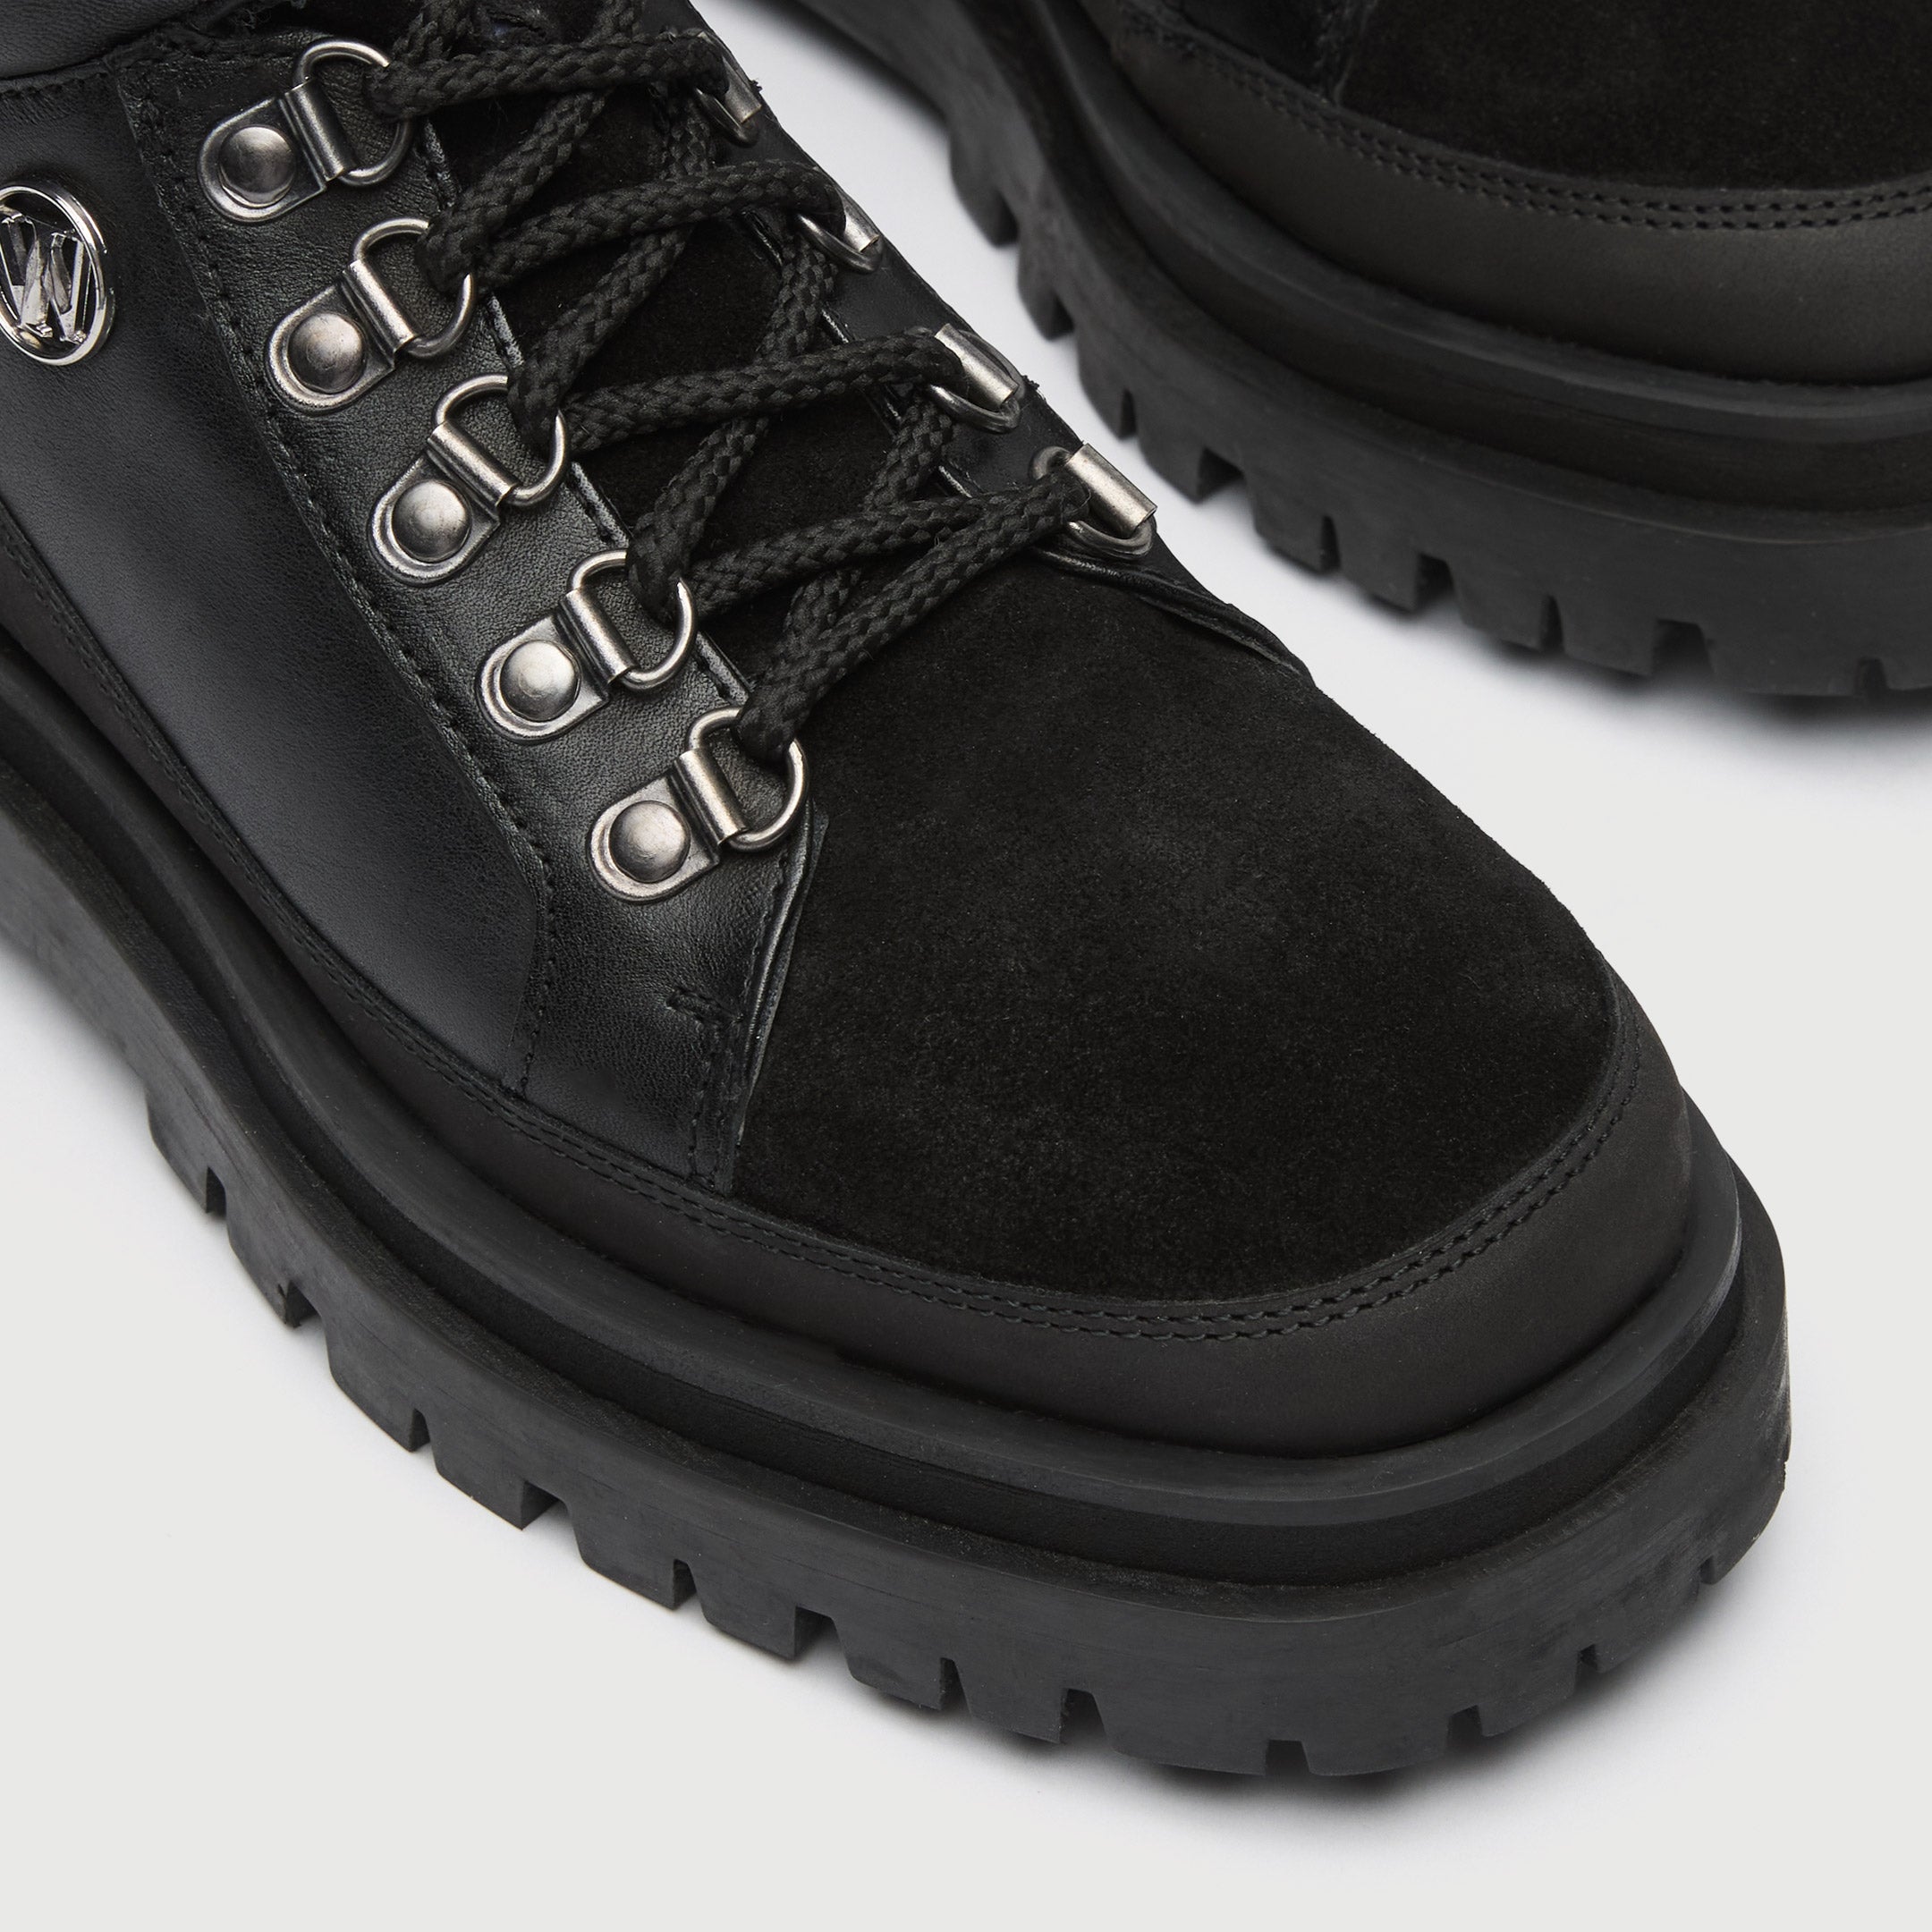 Walk London Women's Dana Hiking Boot in Black Leather